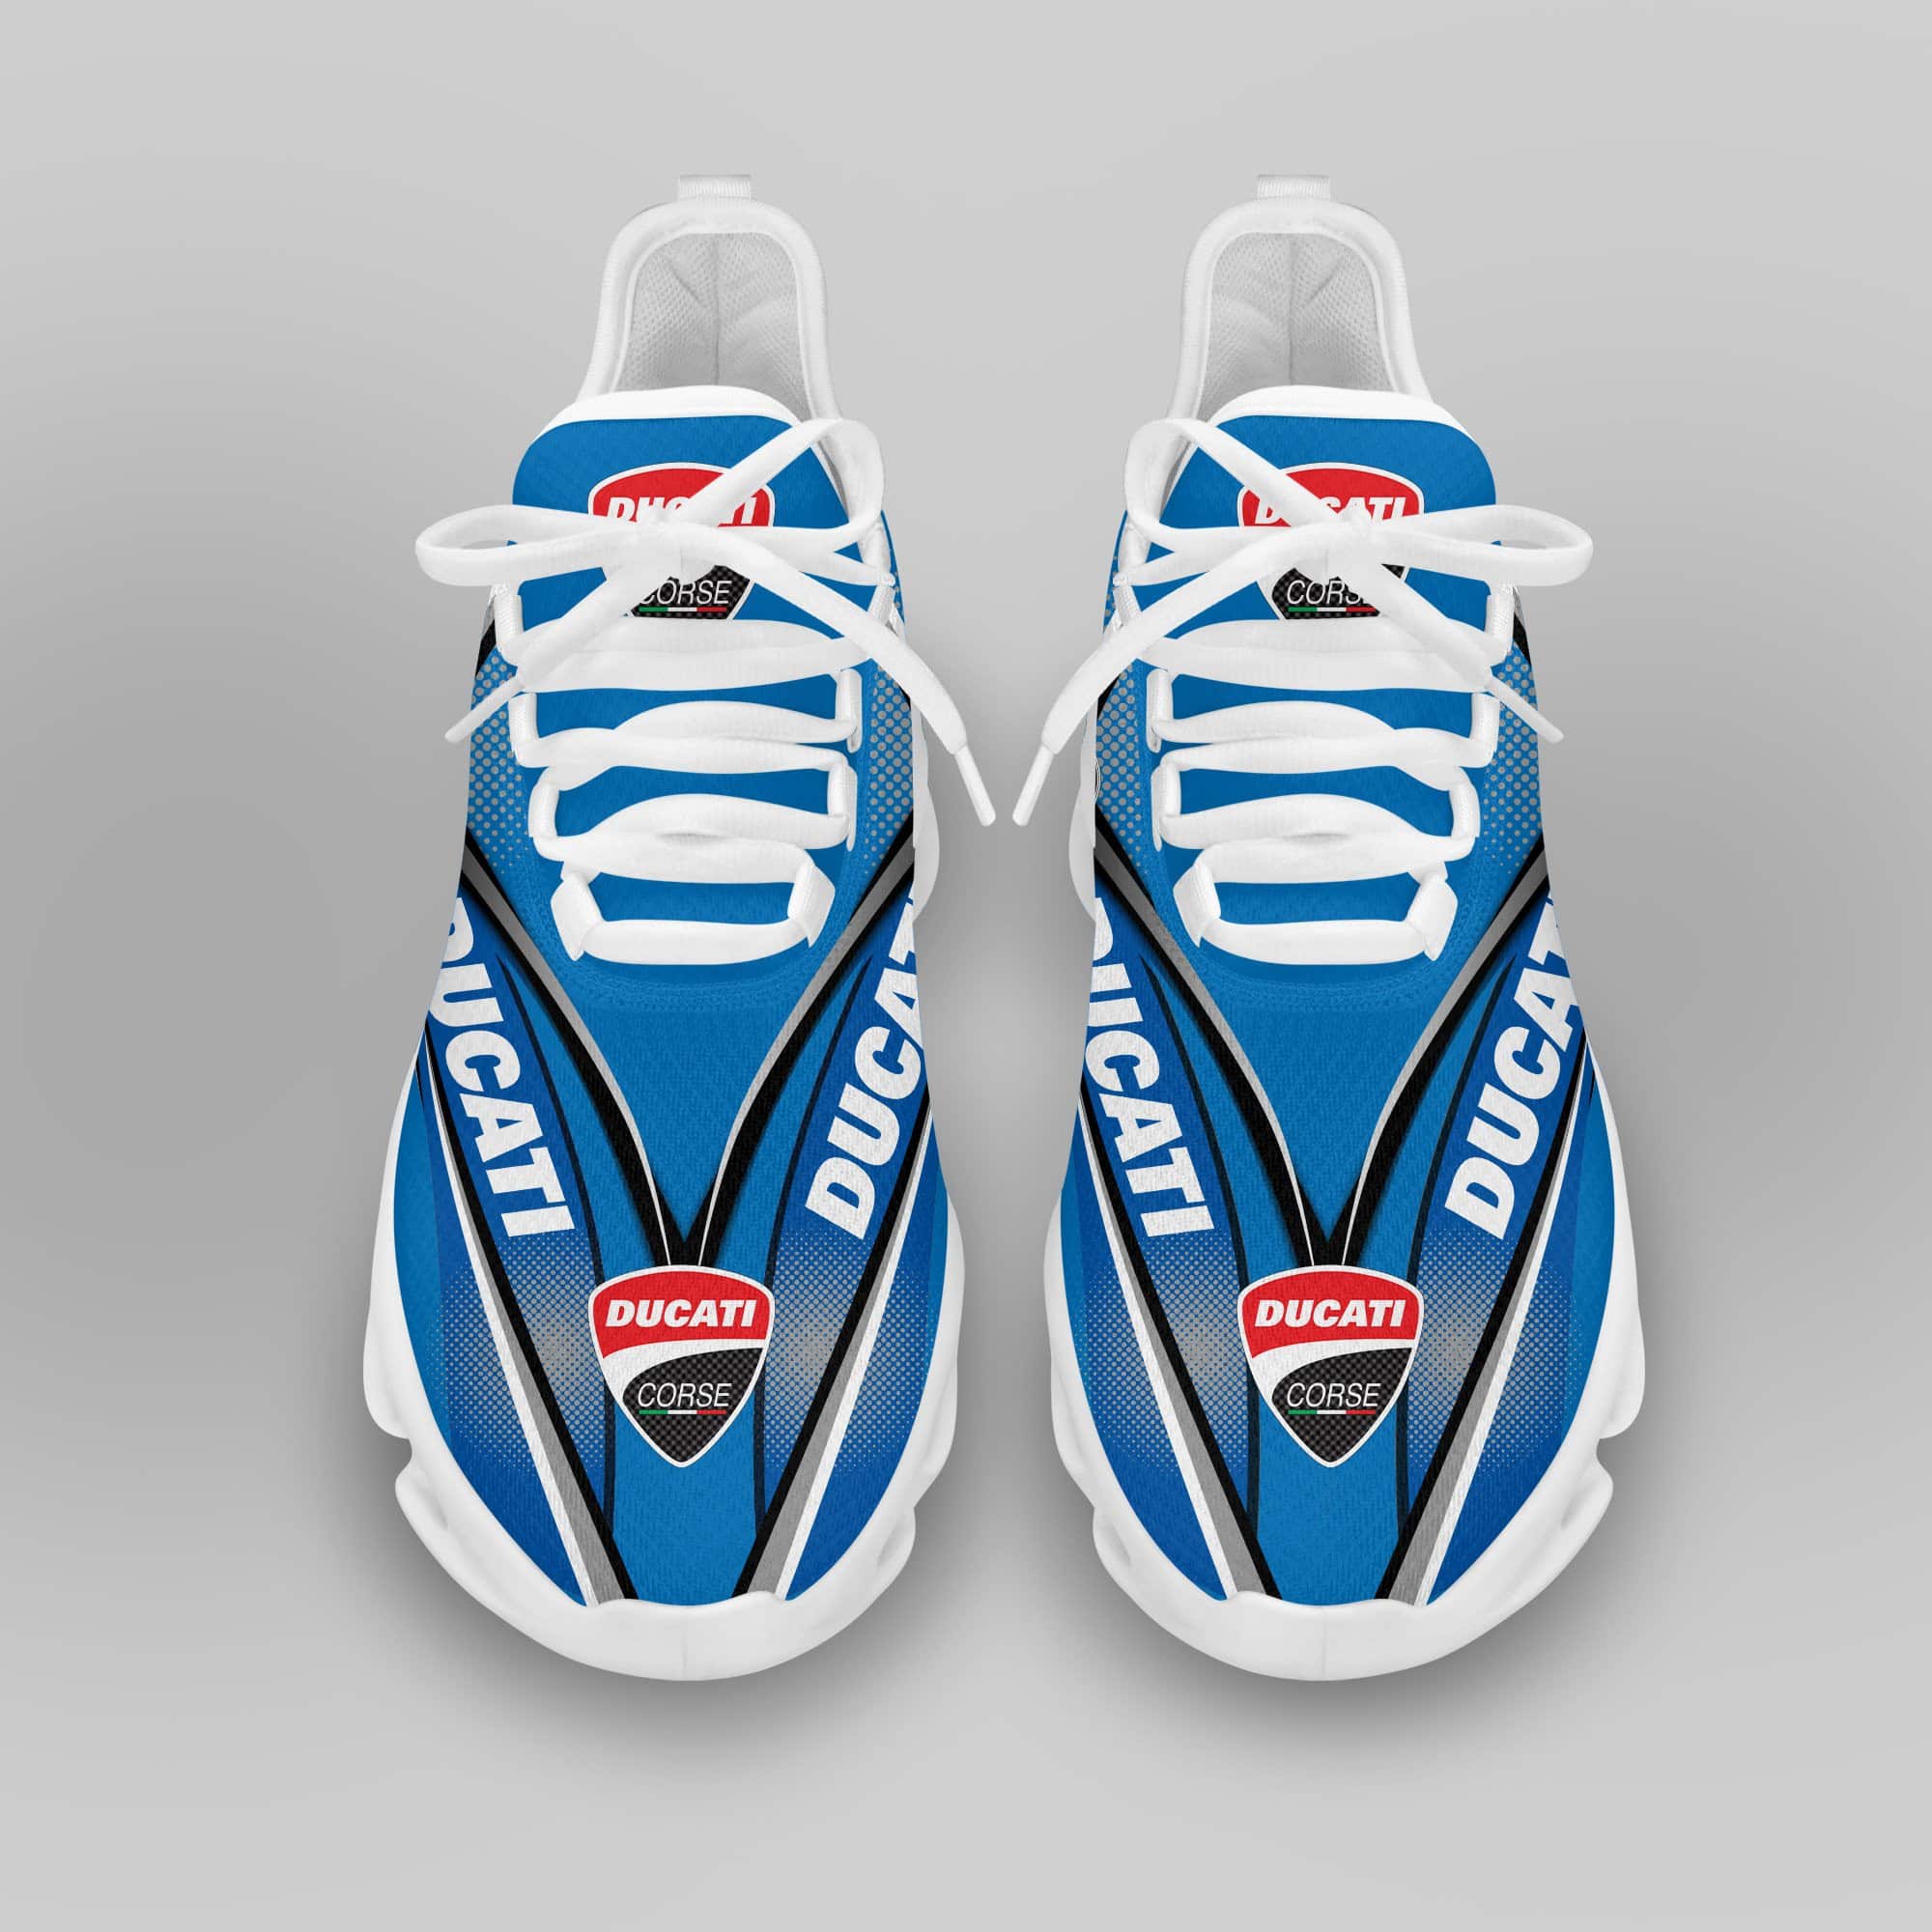 Ducati Racing Running Shoes Max Soul Shoes Sneakers Ver 48 3